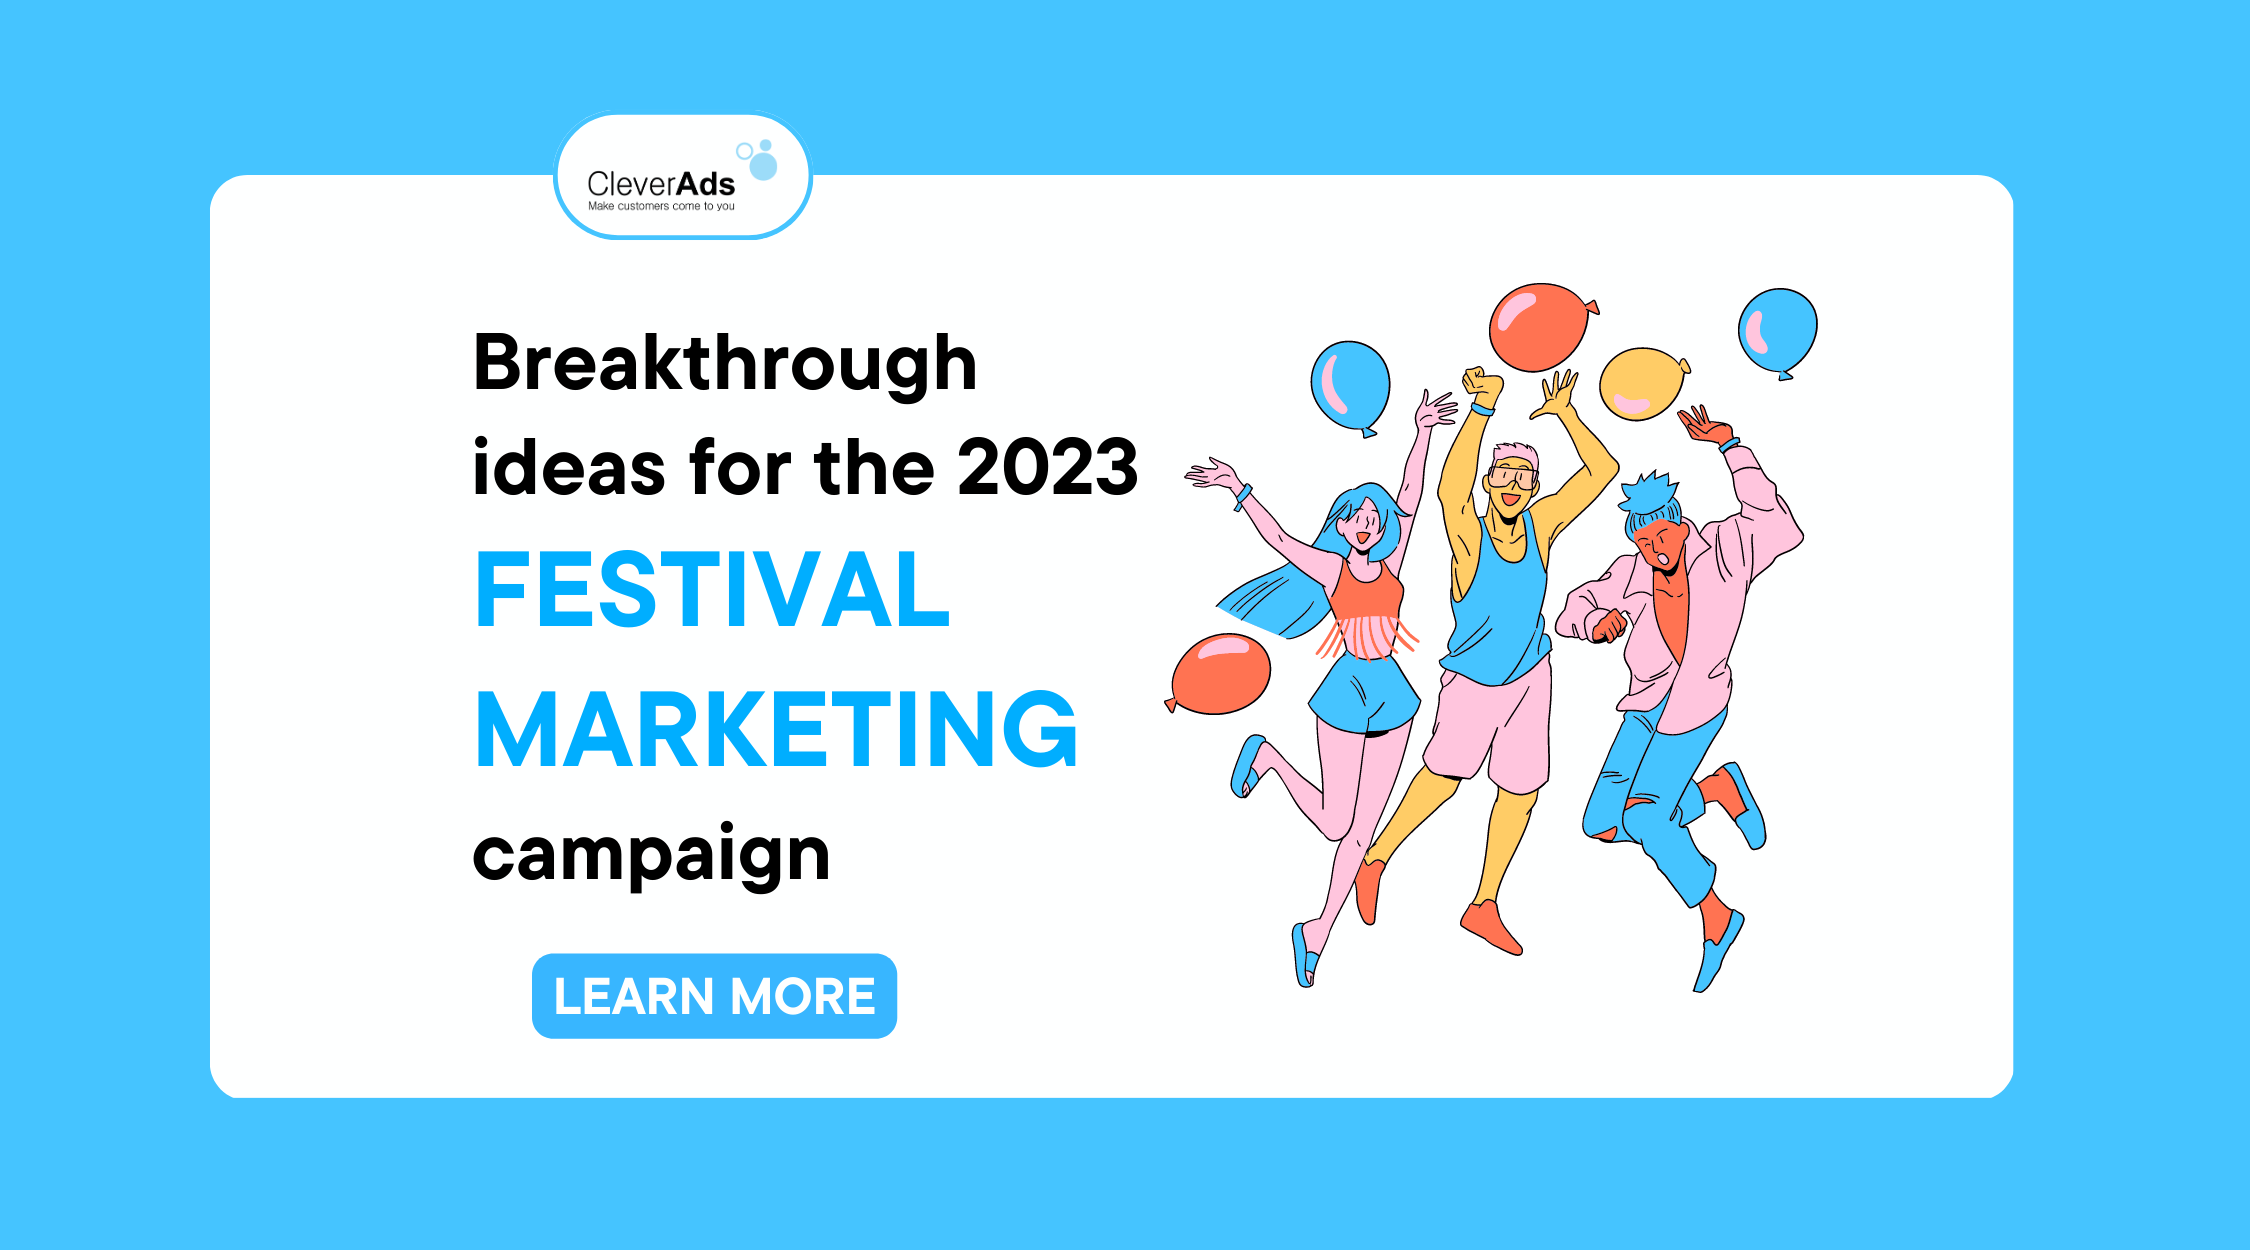 Festival Marketing campaign: Breakthrough ideas for 2023